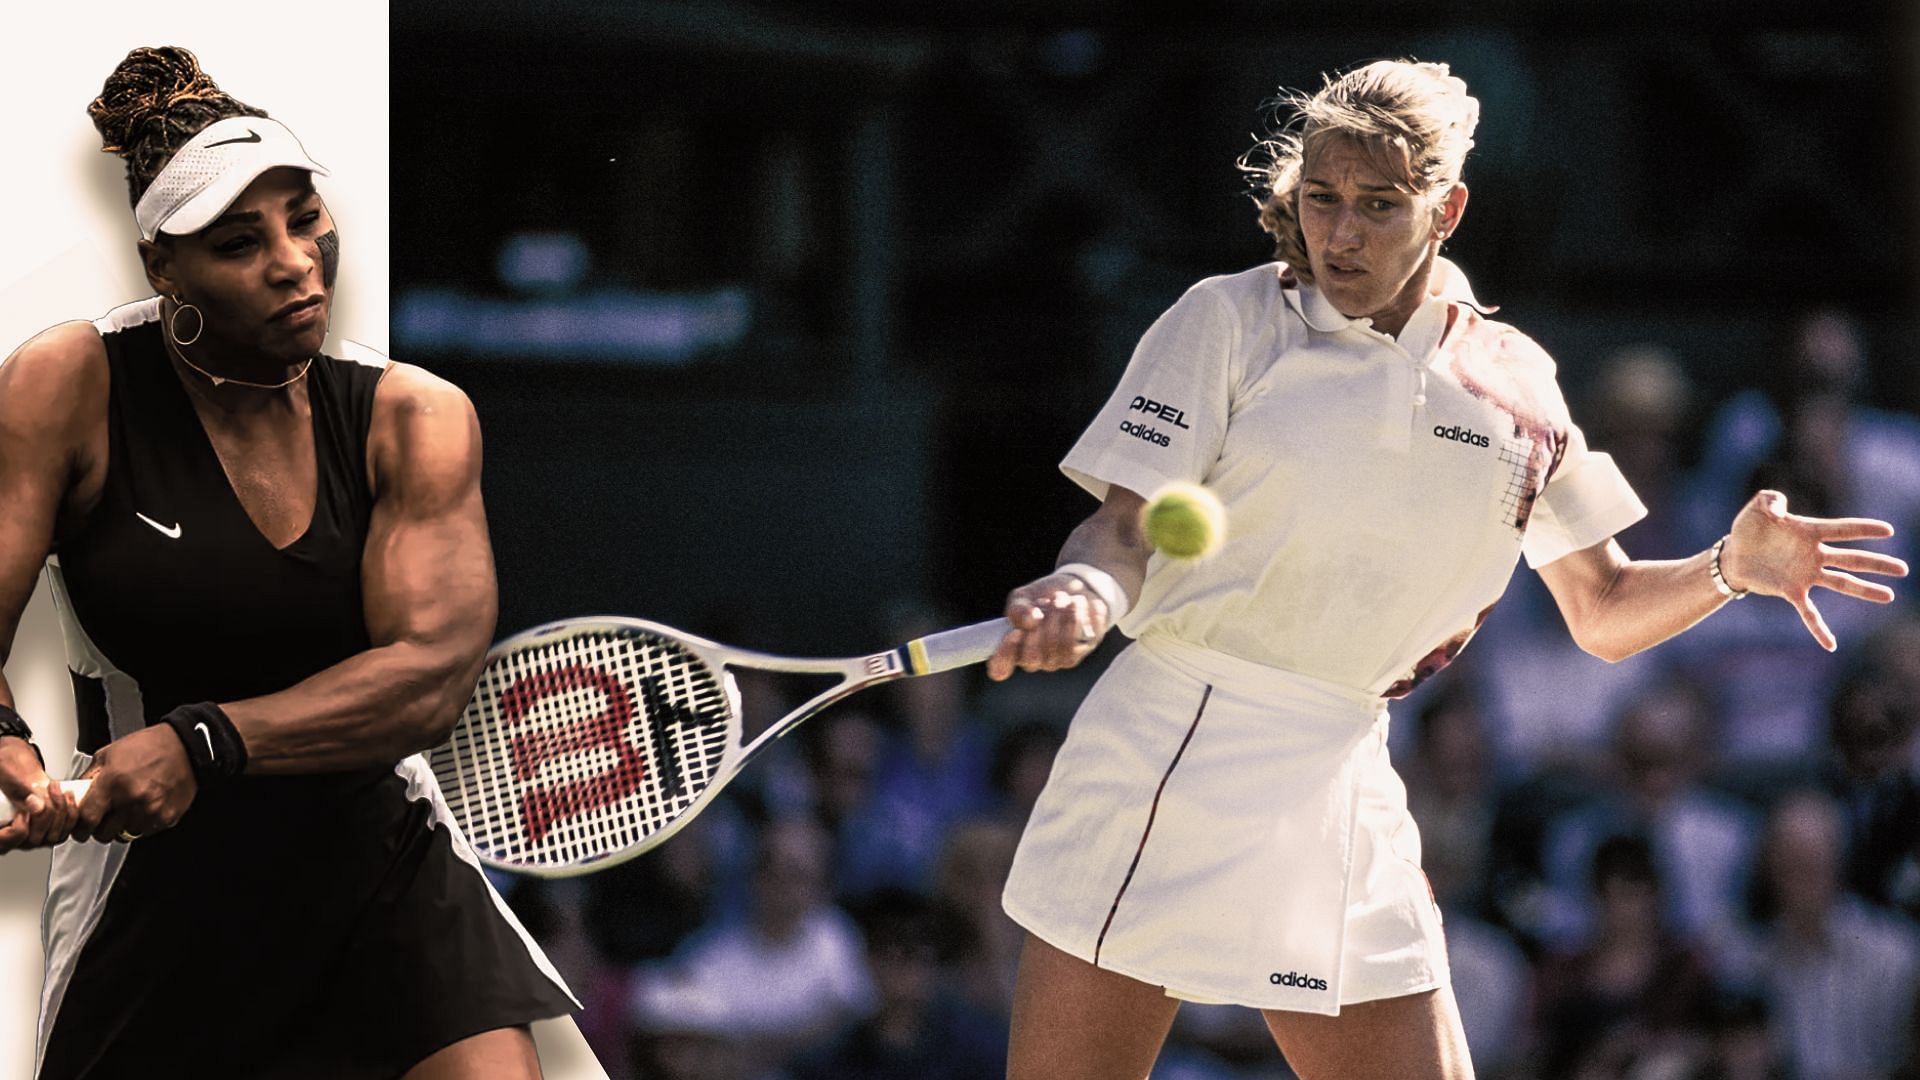 Serena Williams (L) and Steffi Graf